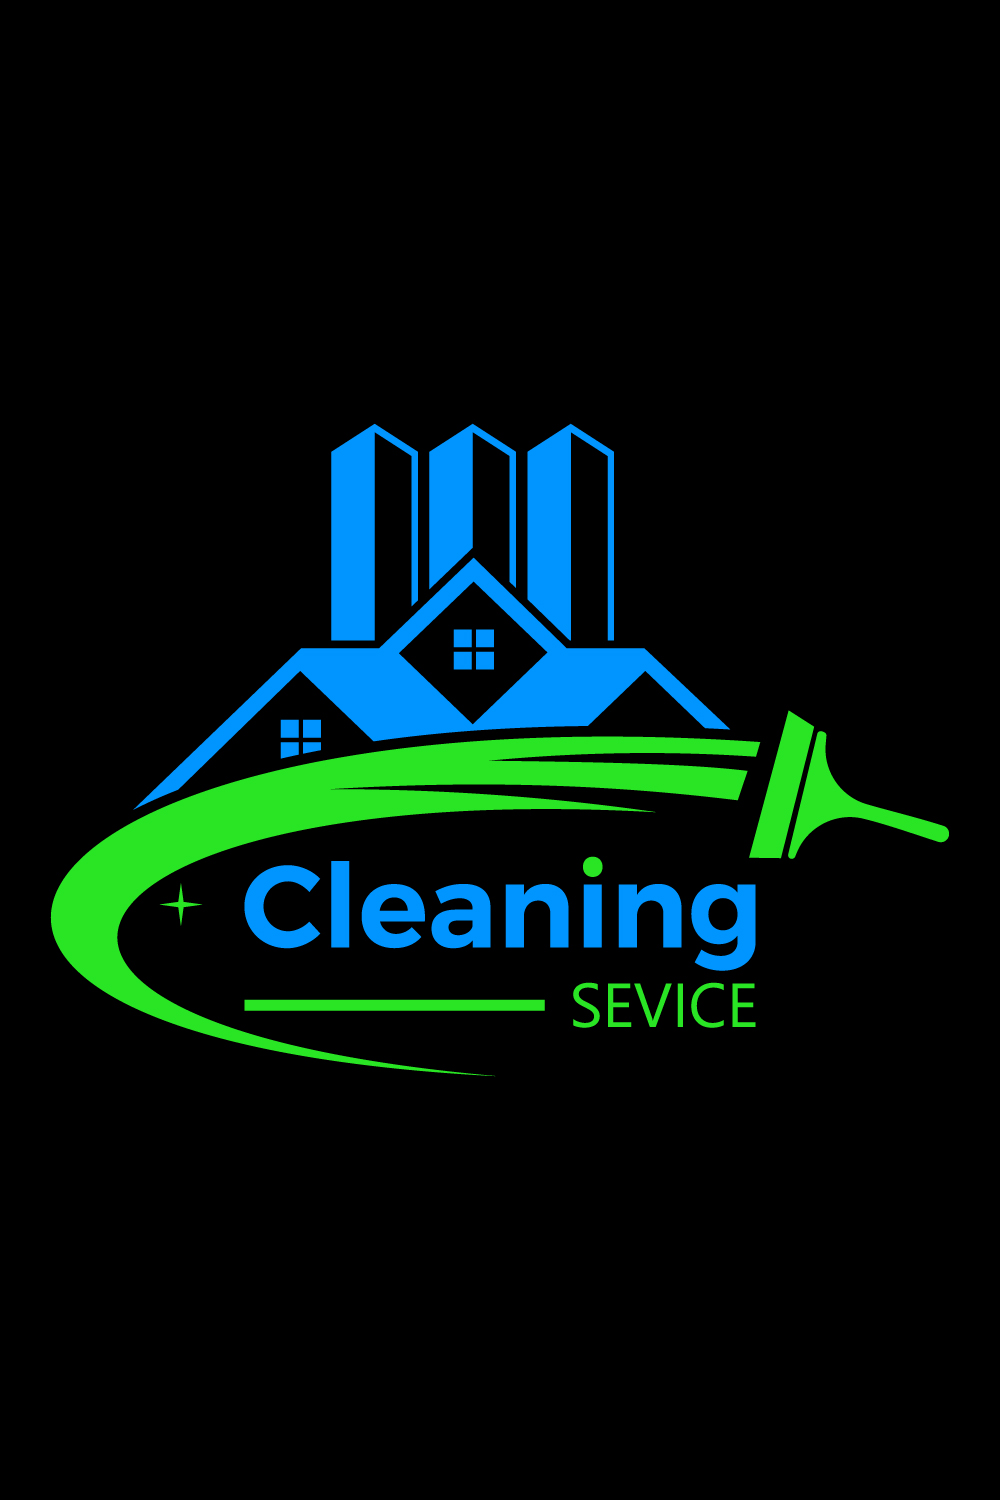 Cleaning service logo design, Vector design concept pinterest preview image.